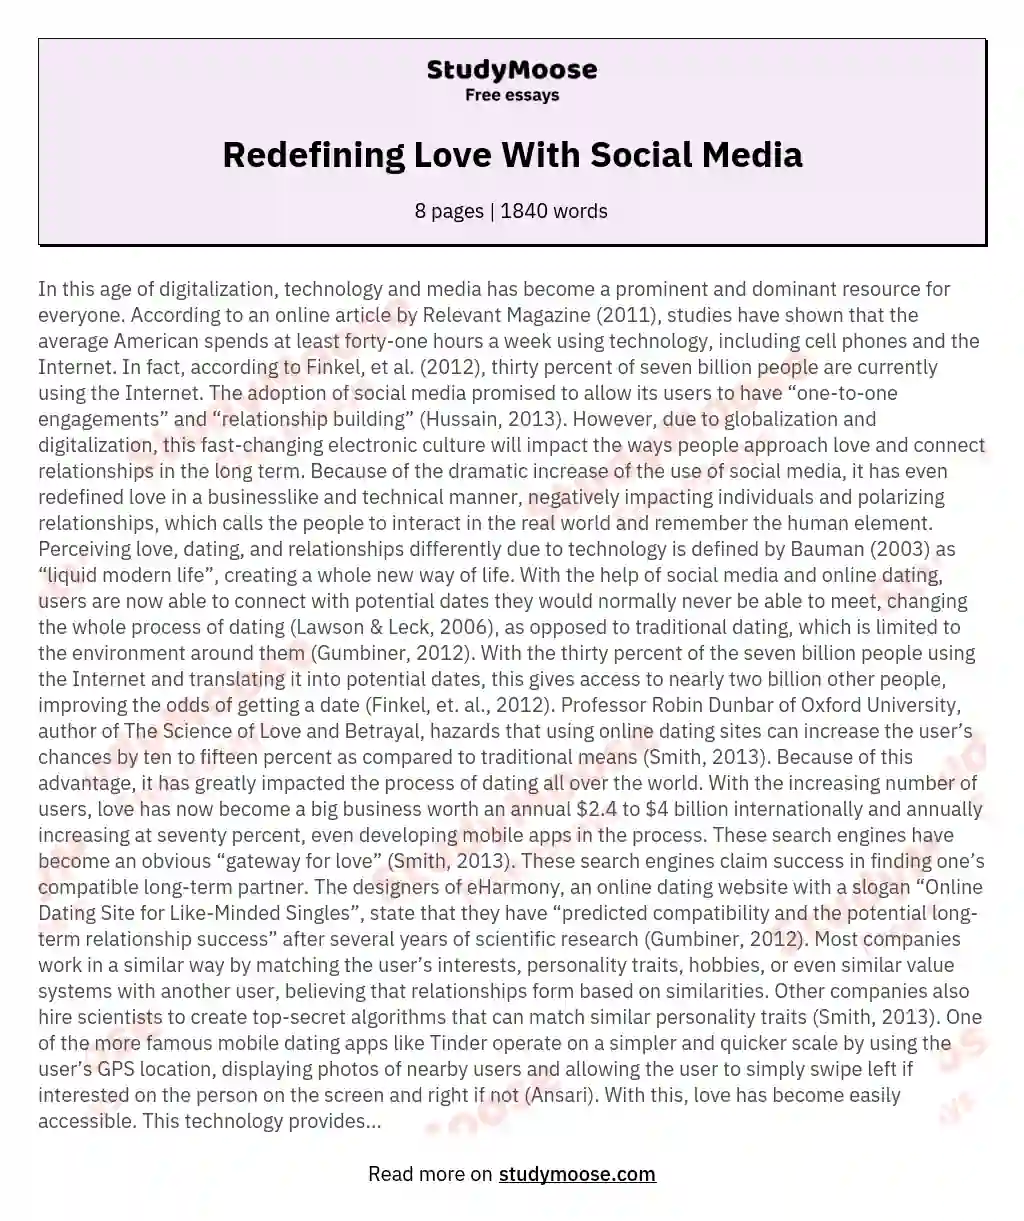 Redefining Love With Social Media essay